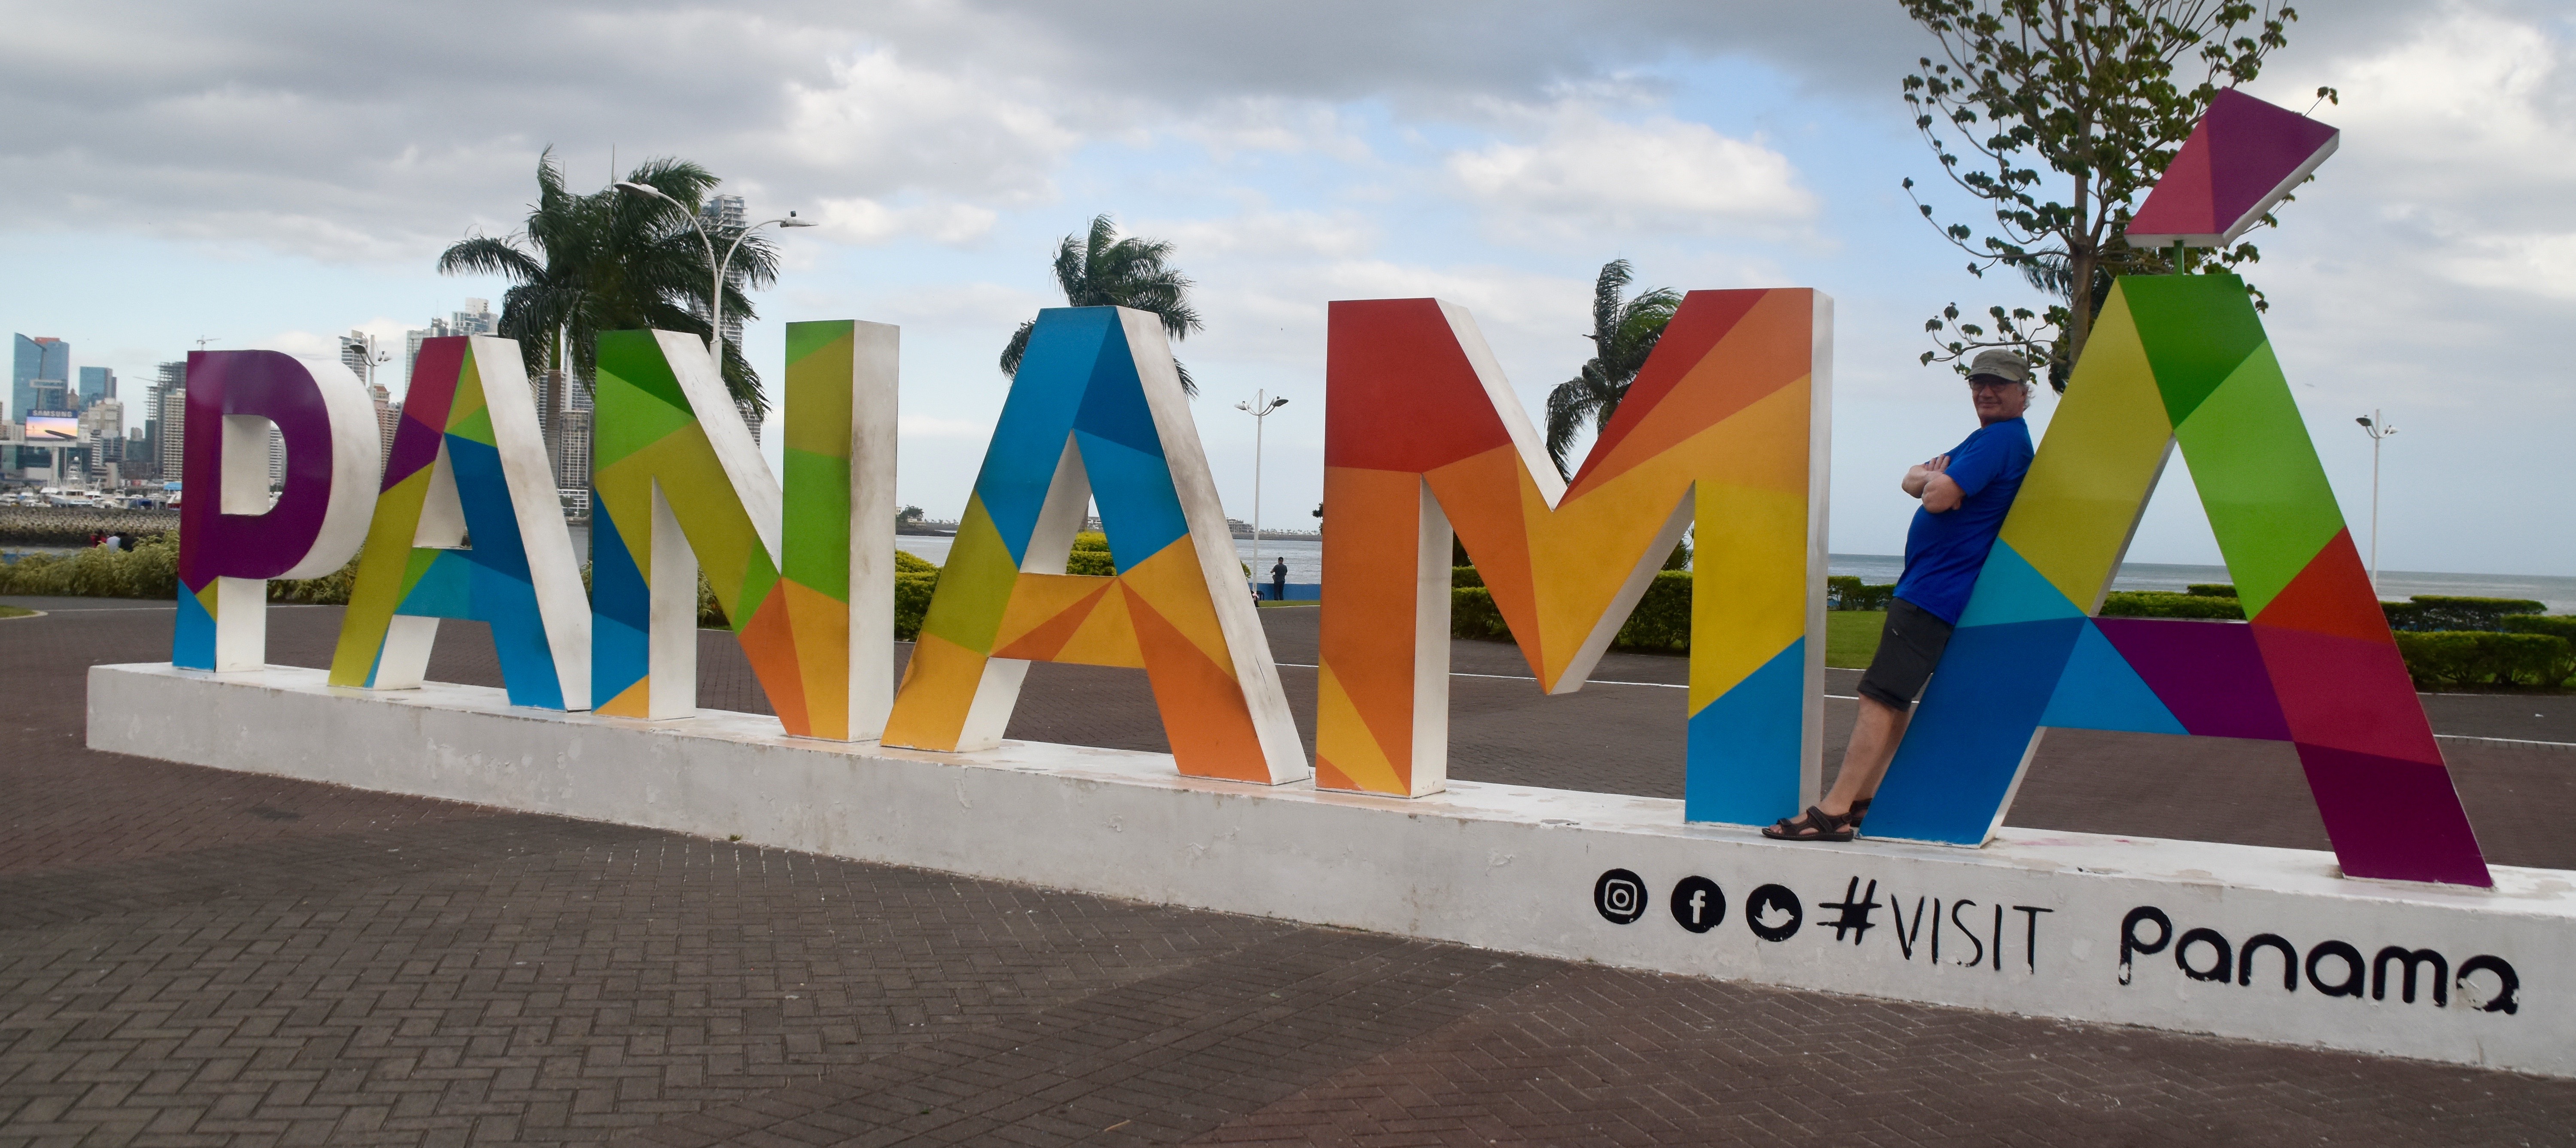 I'm in Panama , Panama City